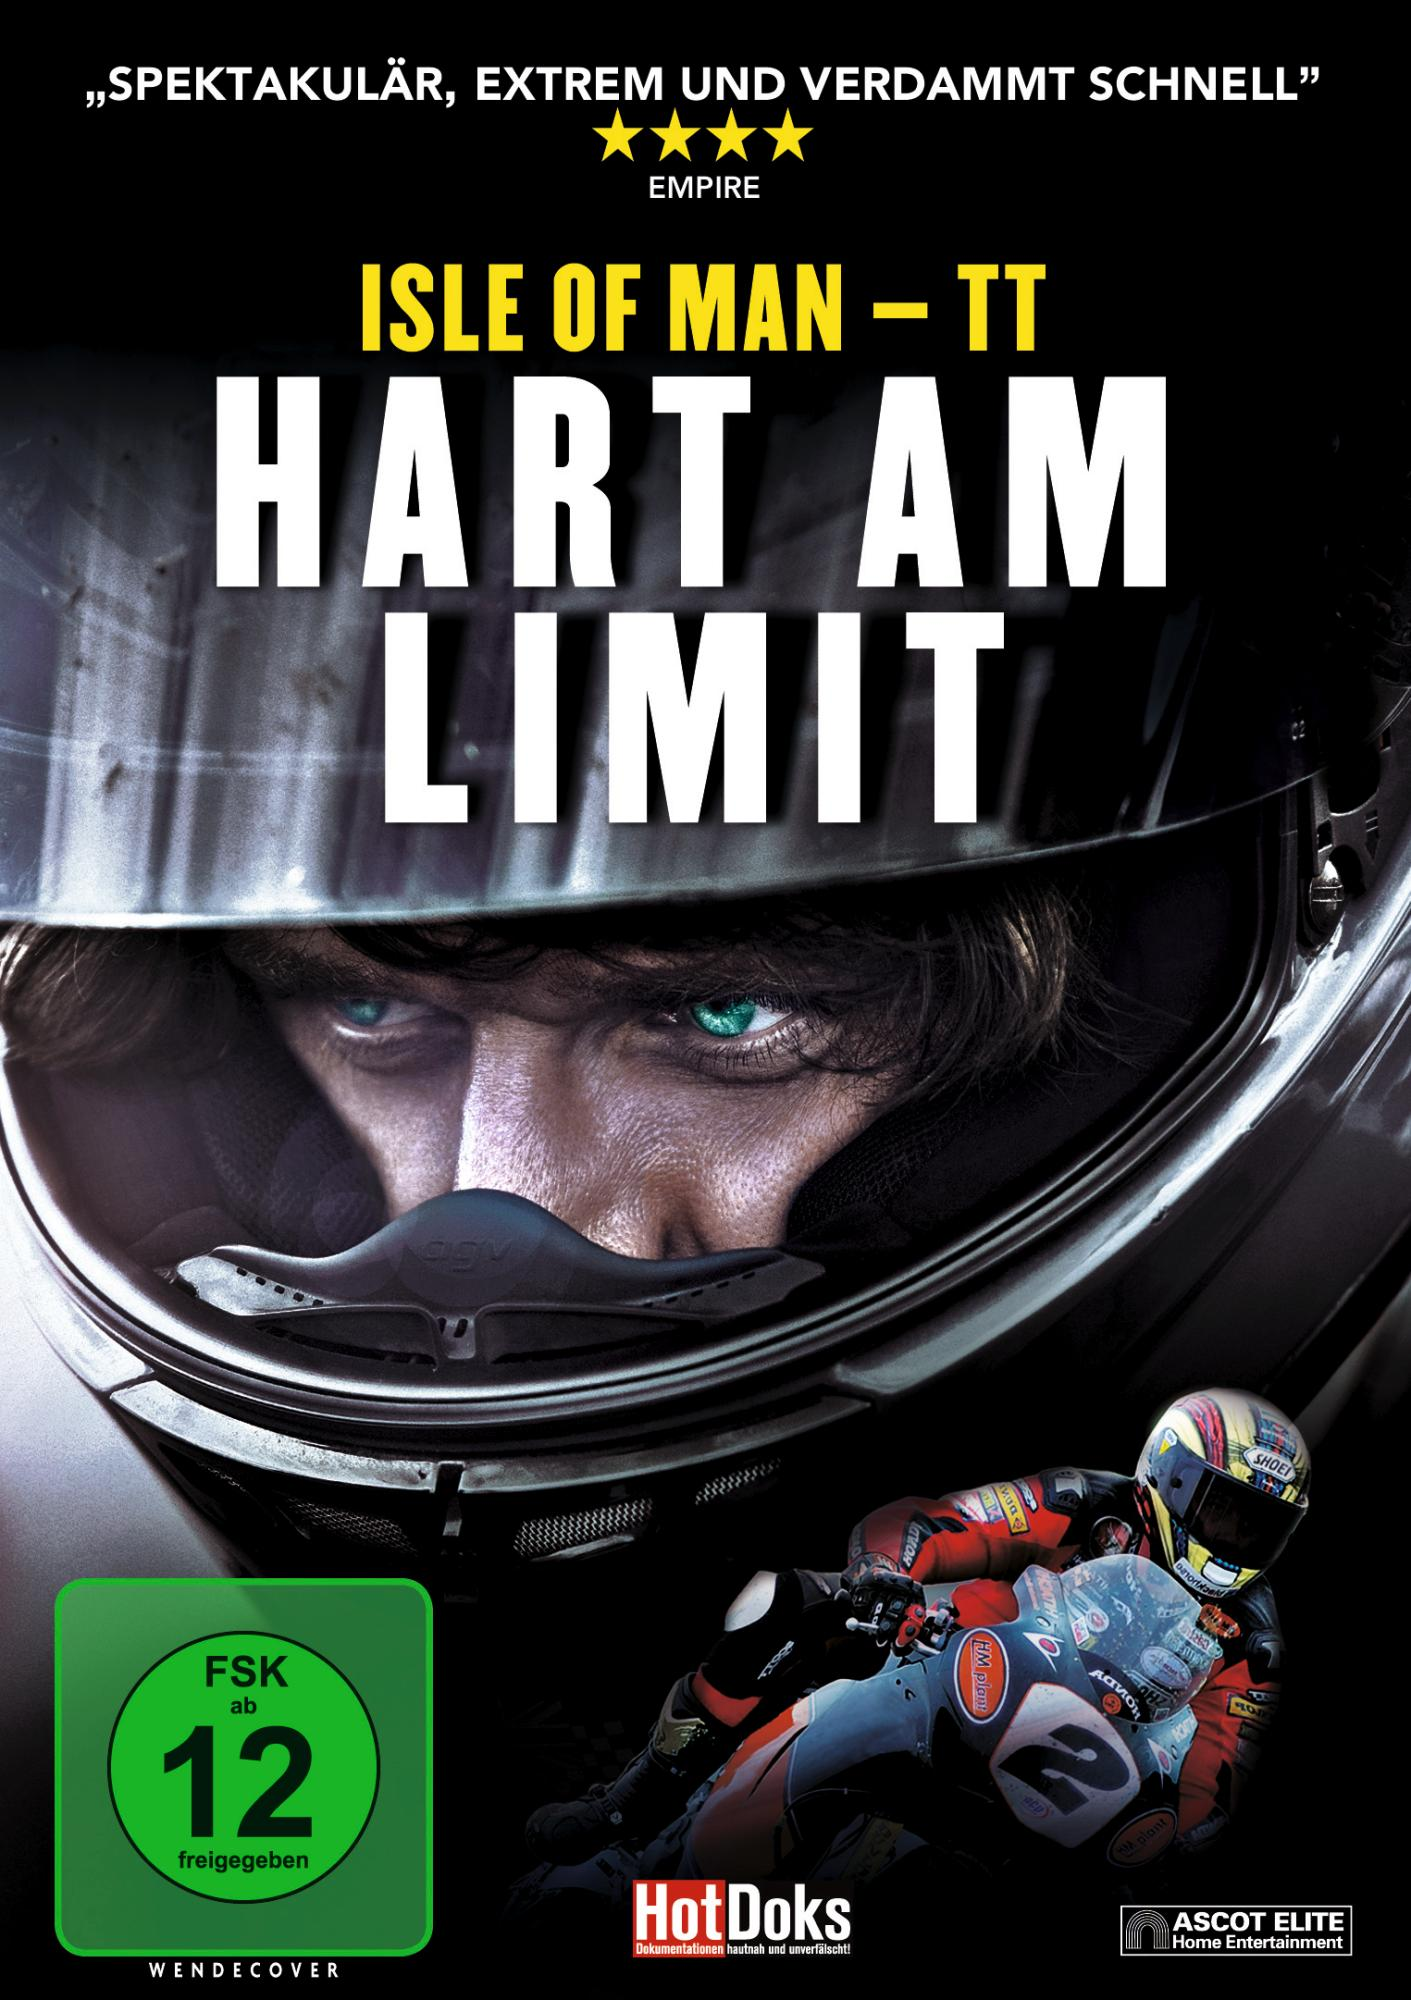 MAN DVD - OF LIMIT HART ISLE AM